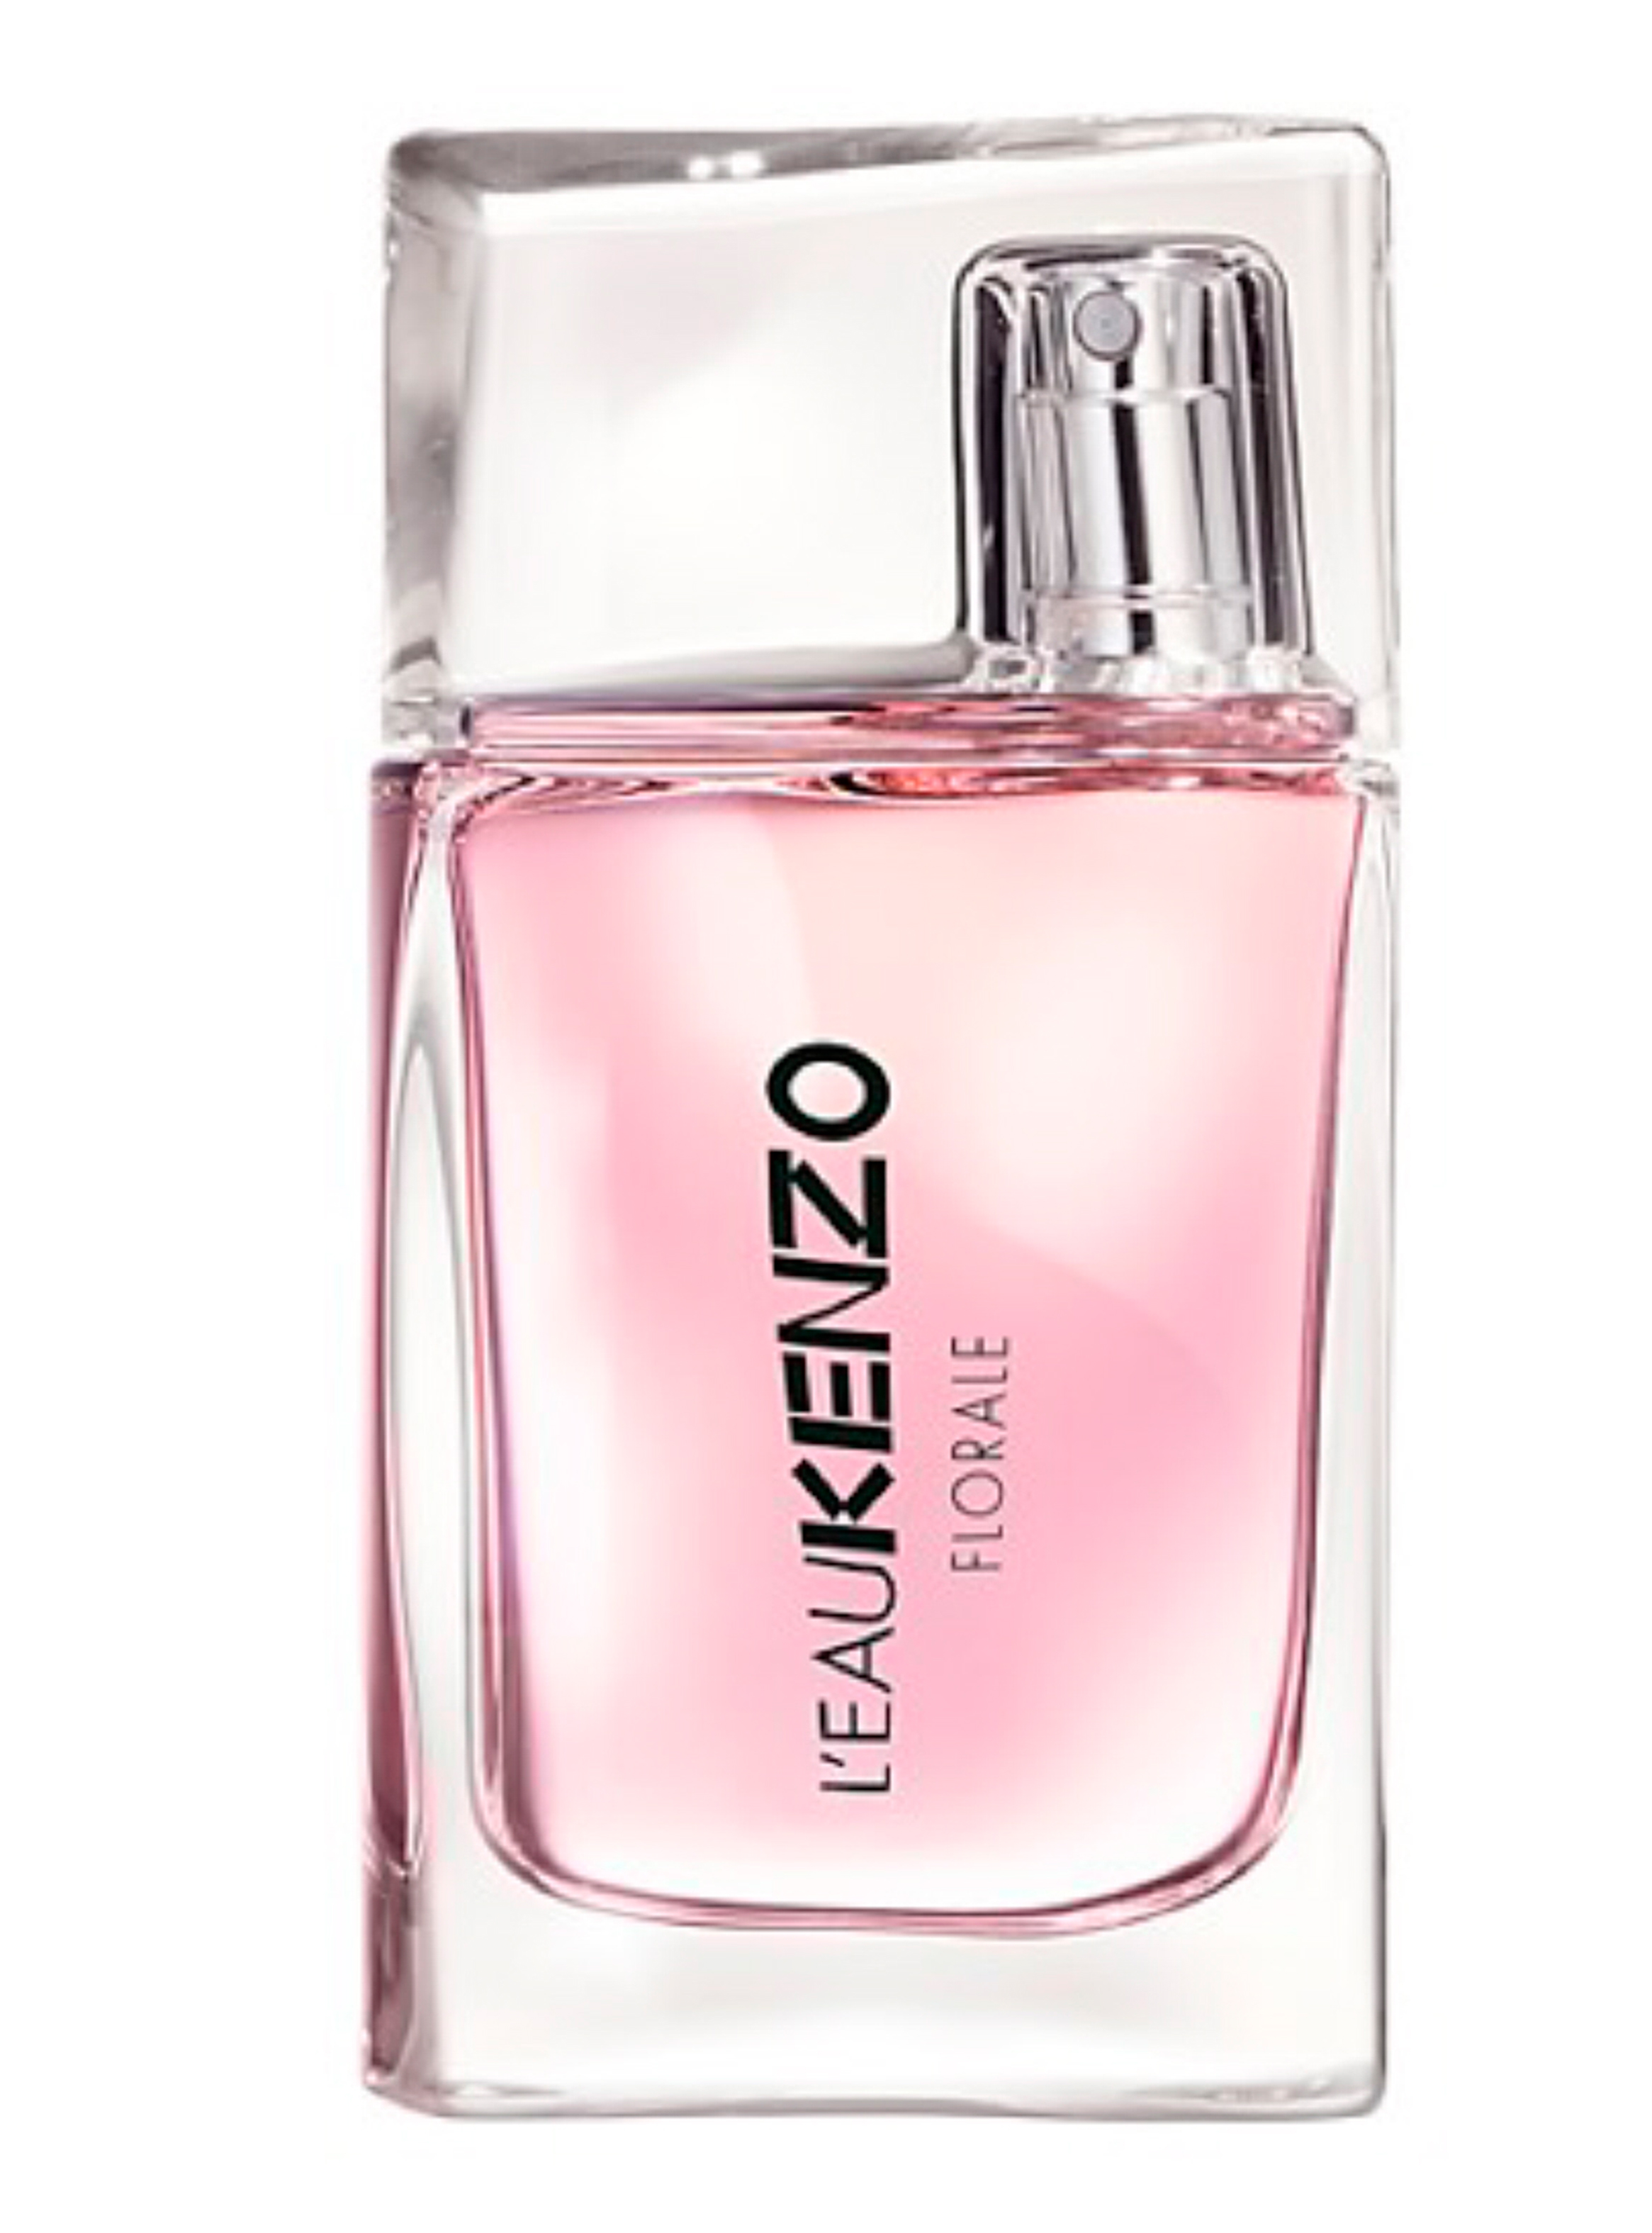 Perfume Kenzo L'Eau Florale EDT Mujer 30 ml